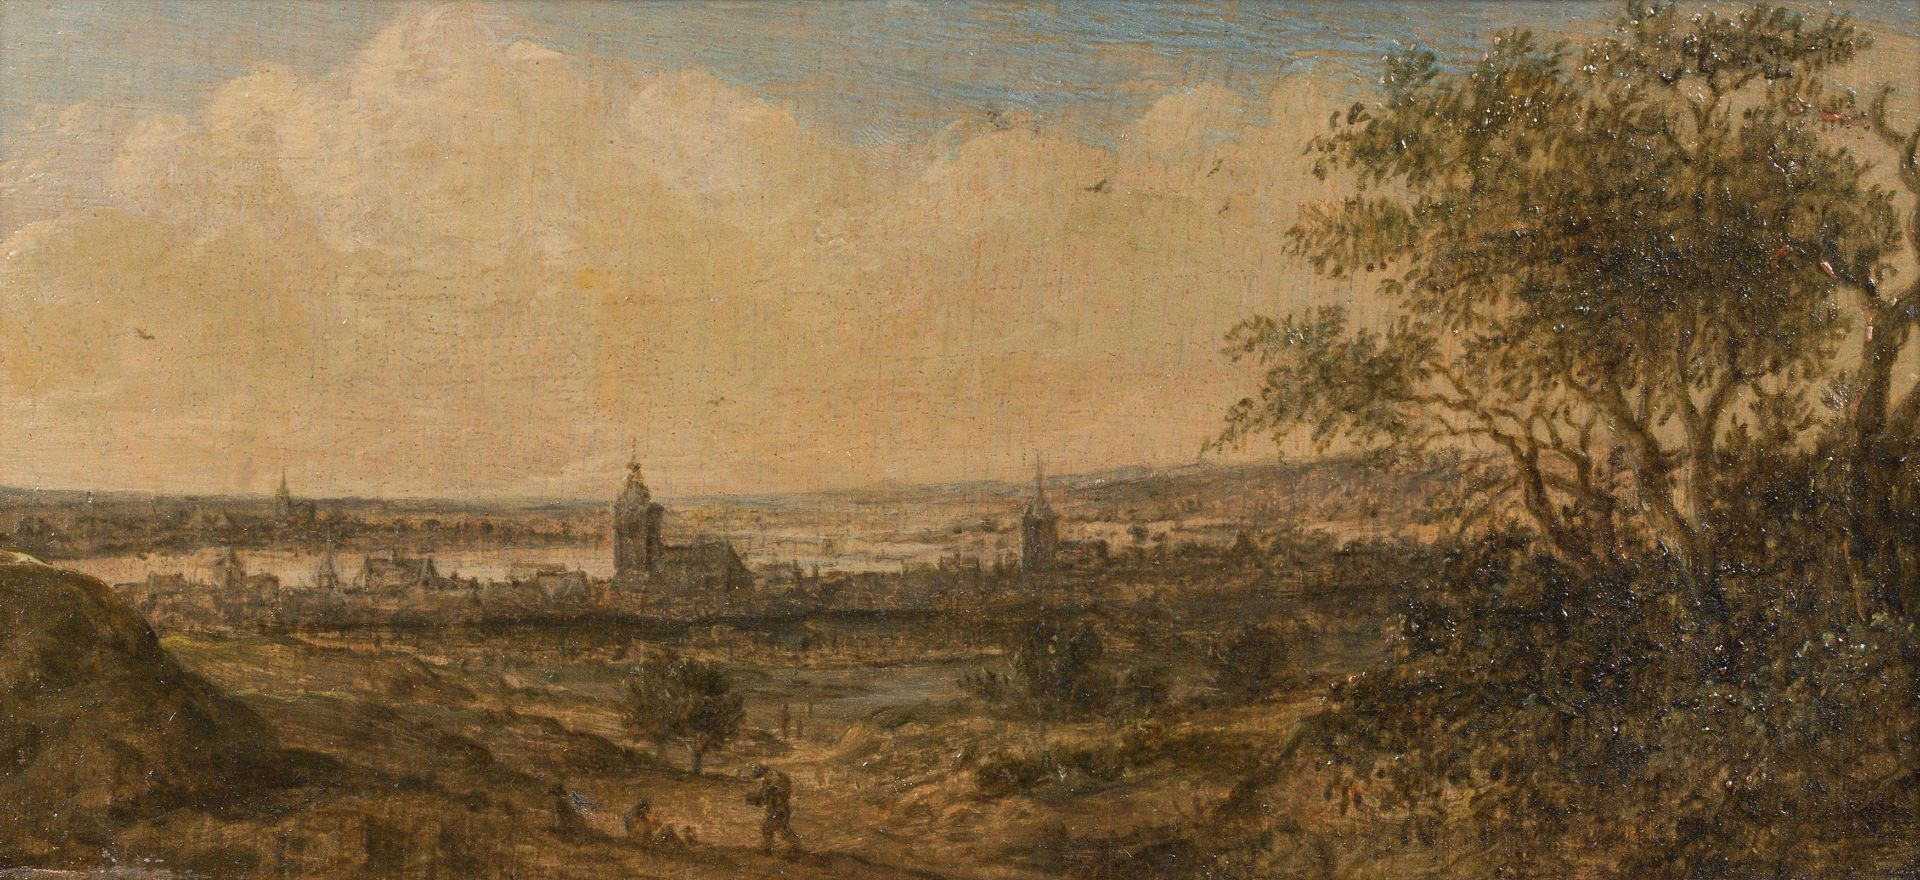 Anthonie J. van der Croos: River landscape with view of a city